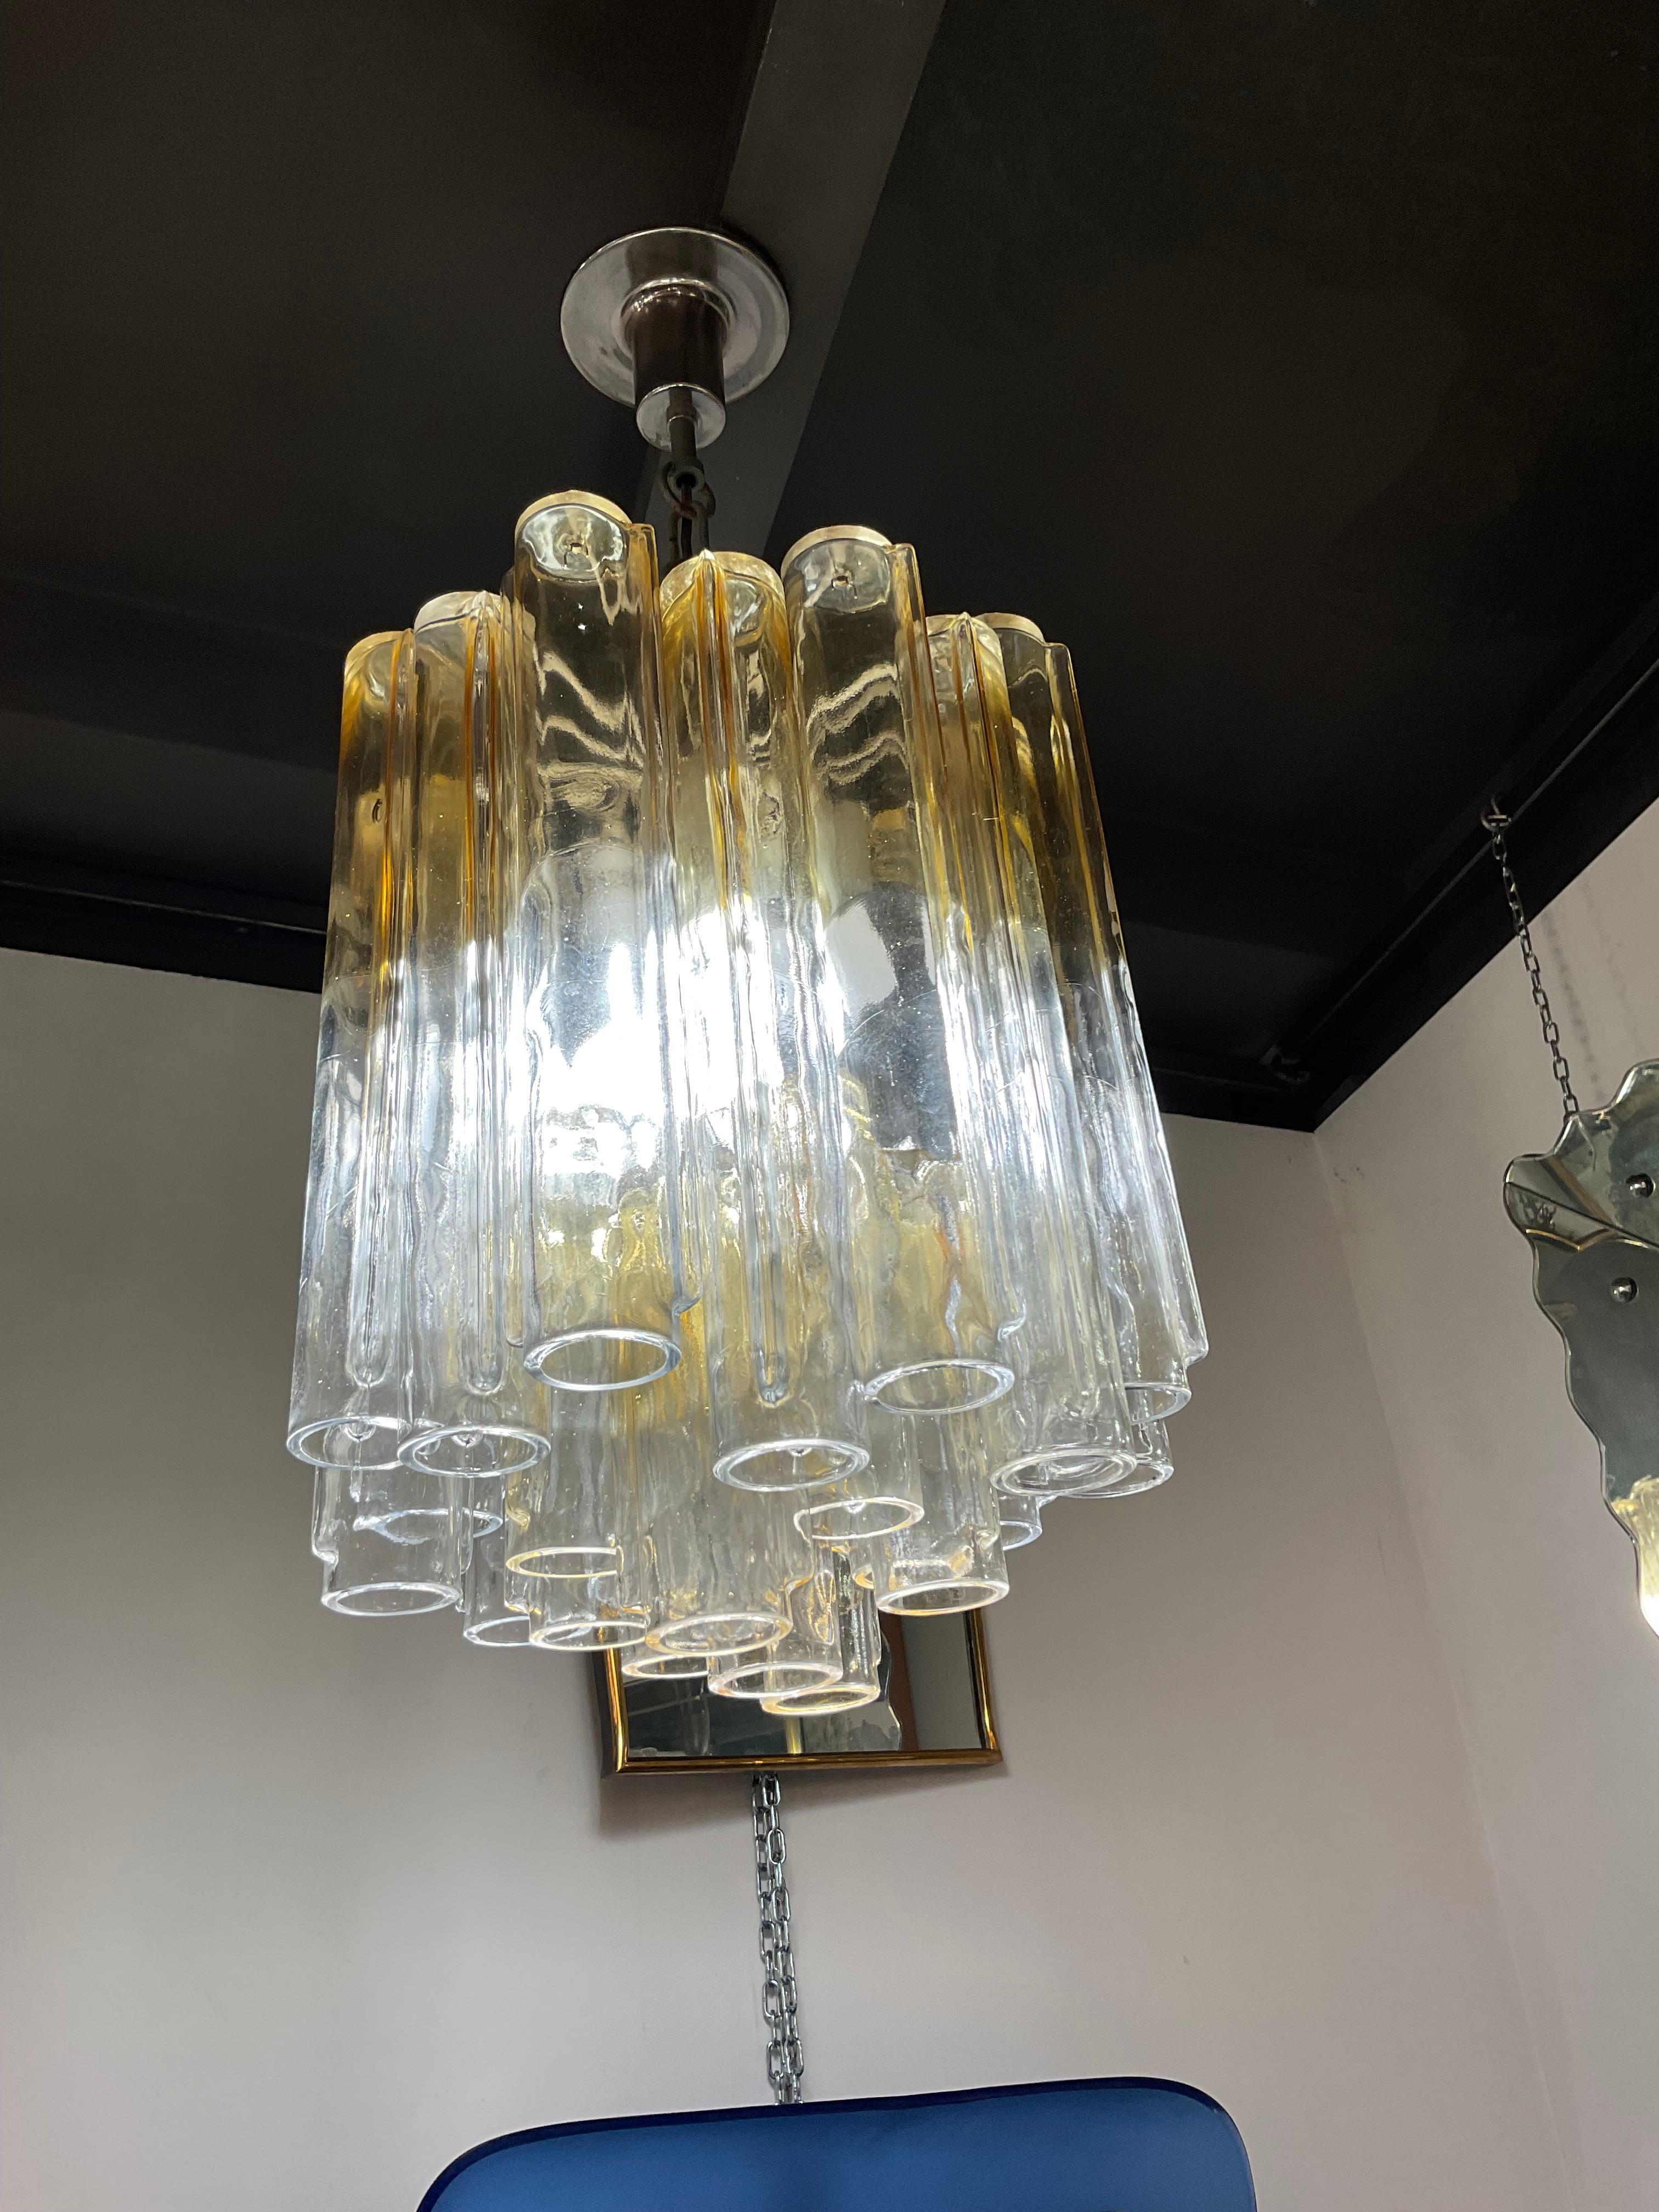 Modern VENINI - Ludovico Diaz de Santillana - Calze model chandelier - MURANO 1970 For Sale